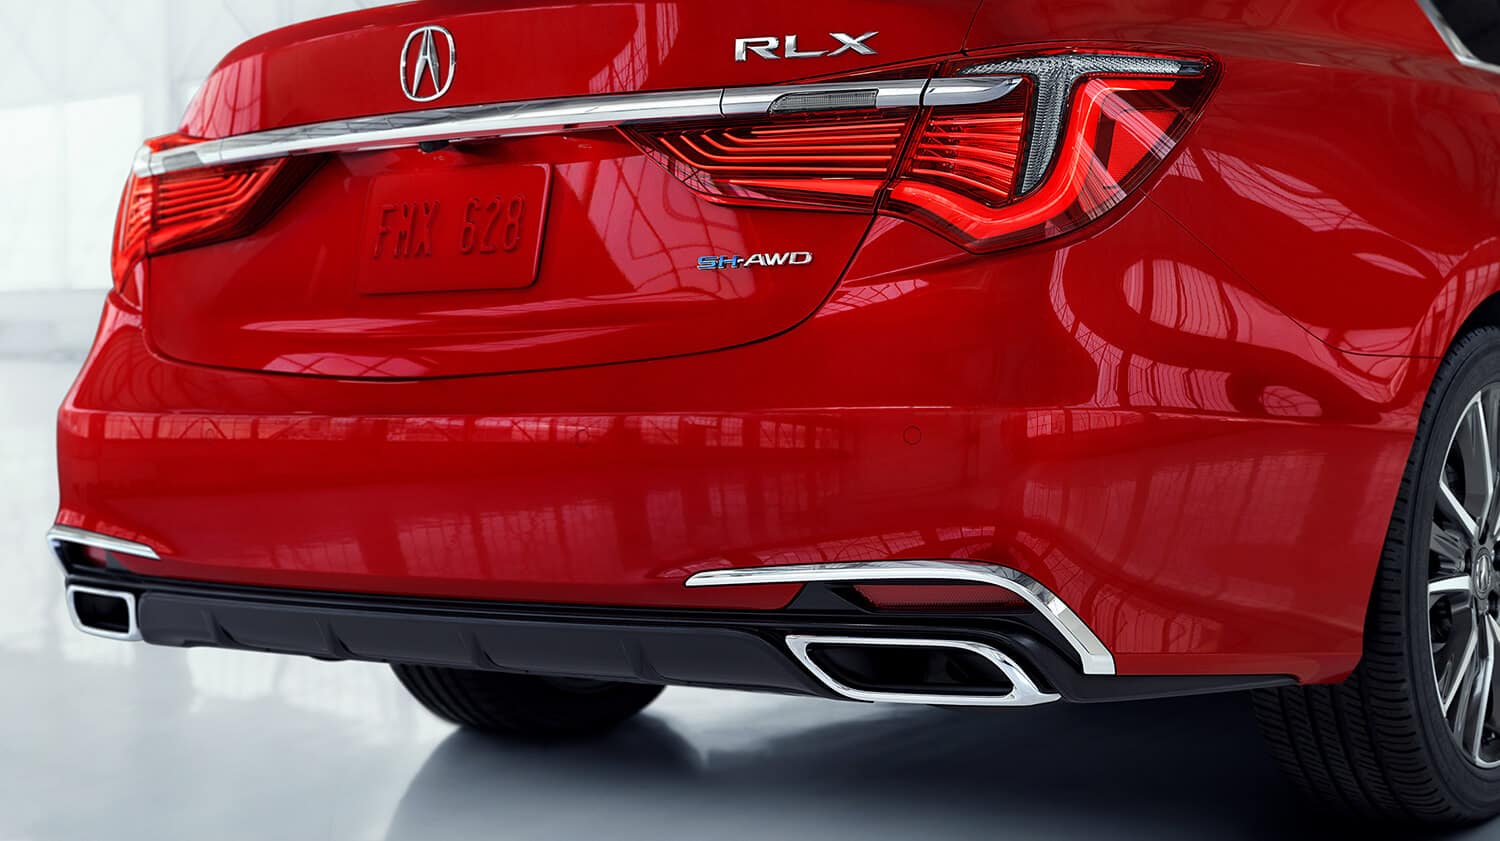 2020 Acura RLX | Premium Luxury Sedan in Colorado | Rocky Mountain Acura  Dealers